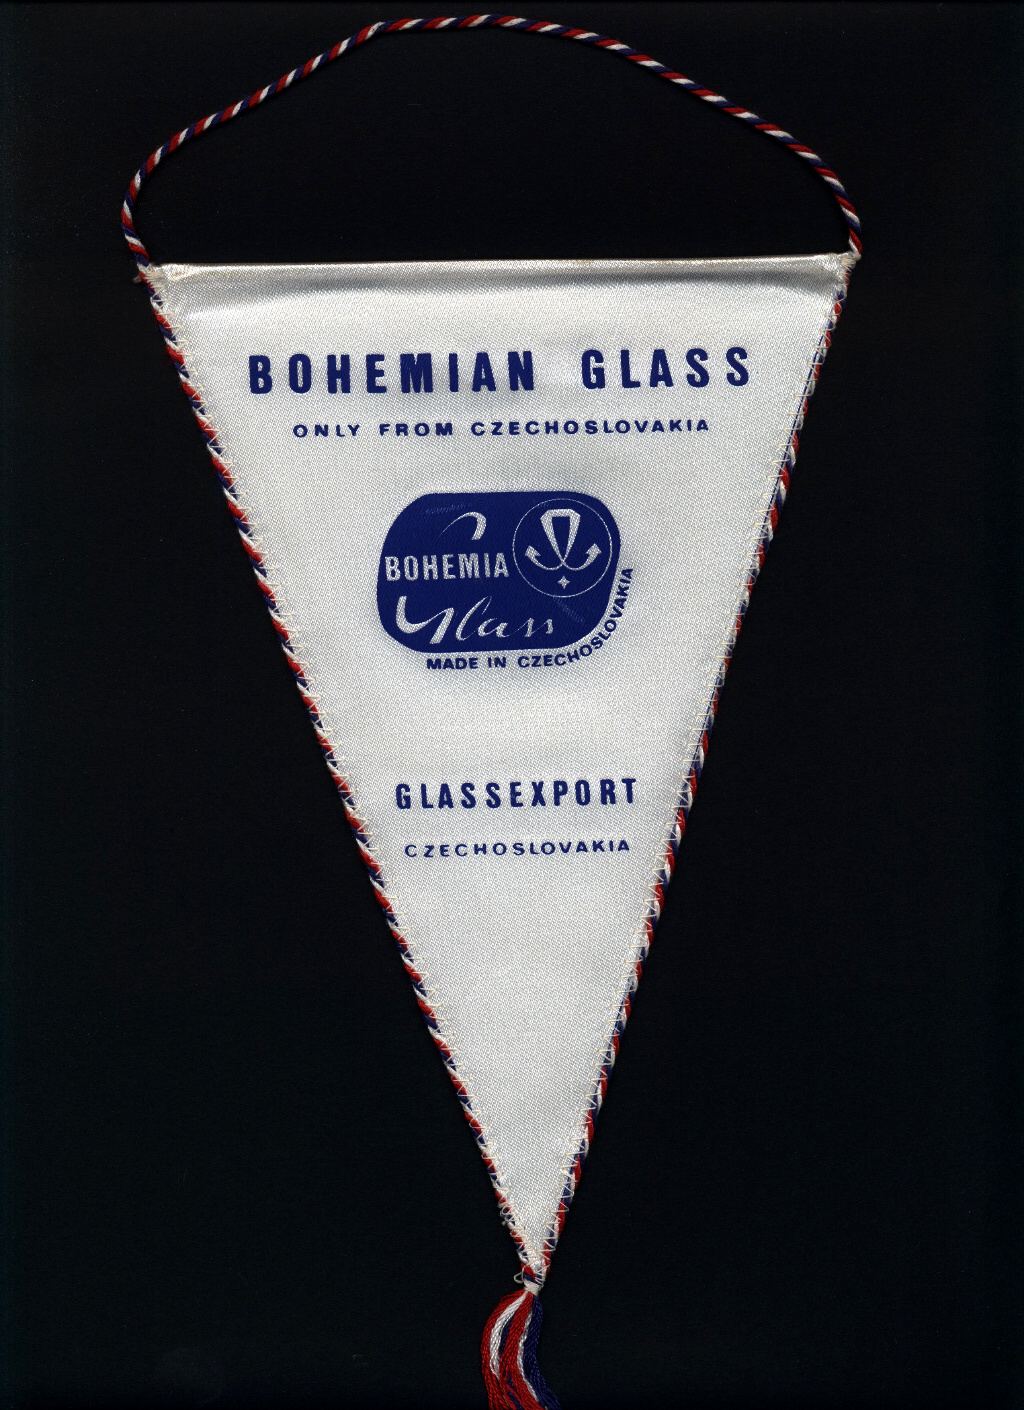 "Bohemian Glass Wimpel"